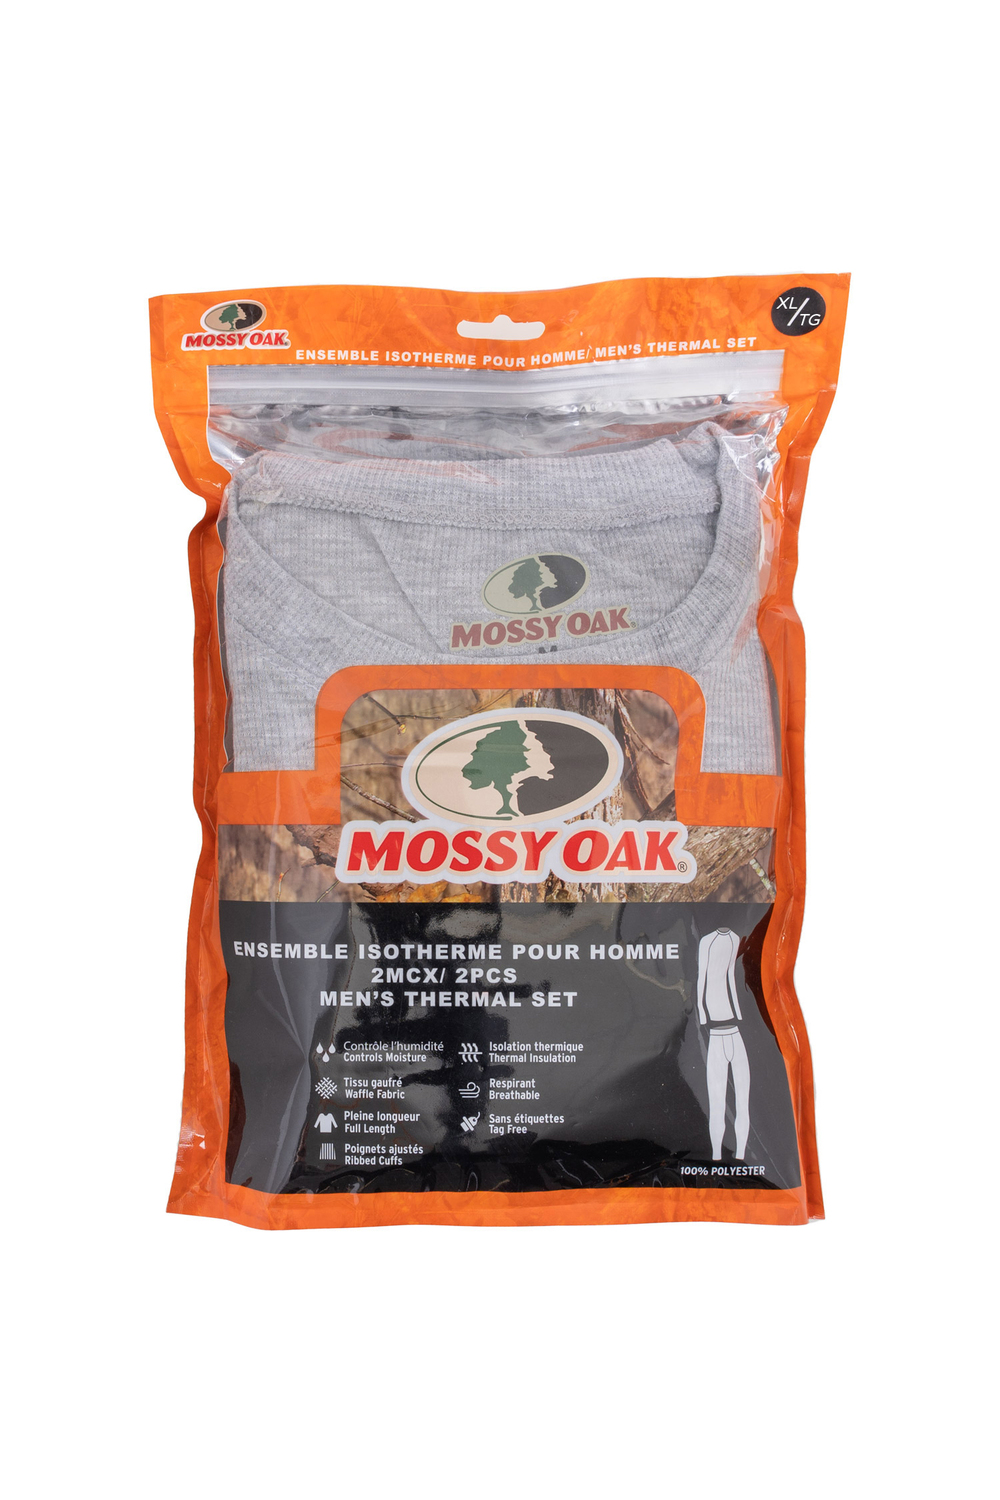 Mossy Oak - Men's 2 piece thermal set, grey, extra large (XL)